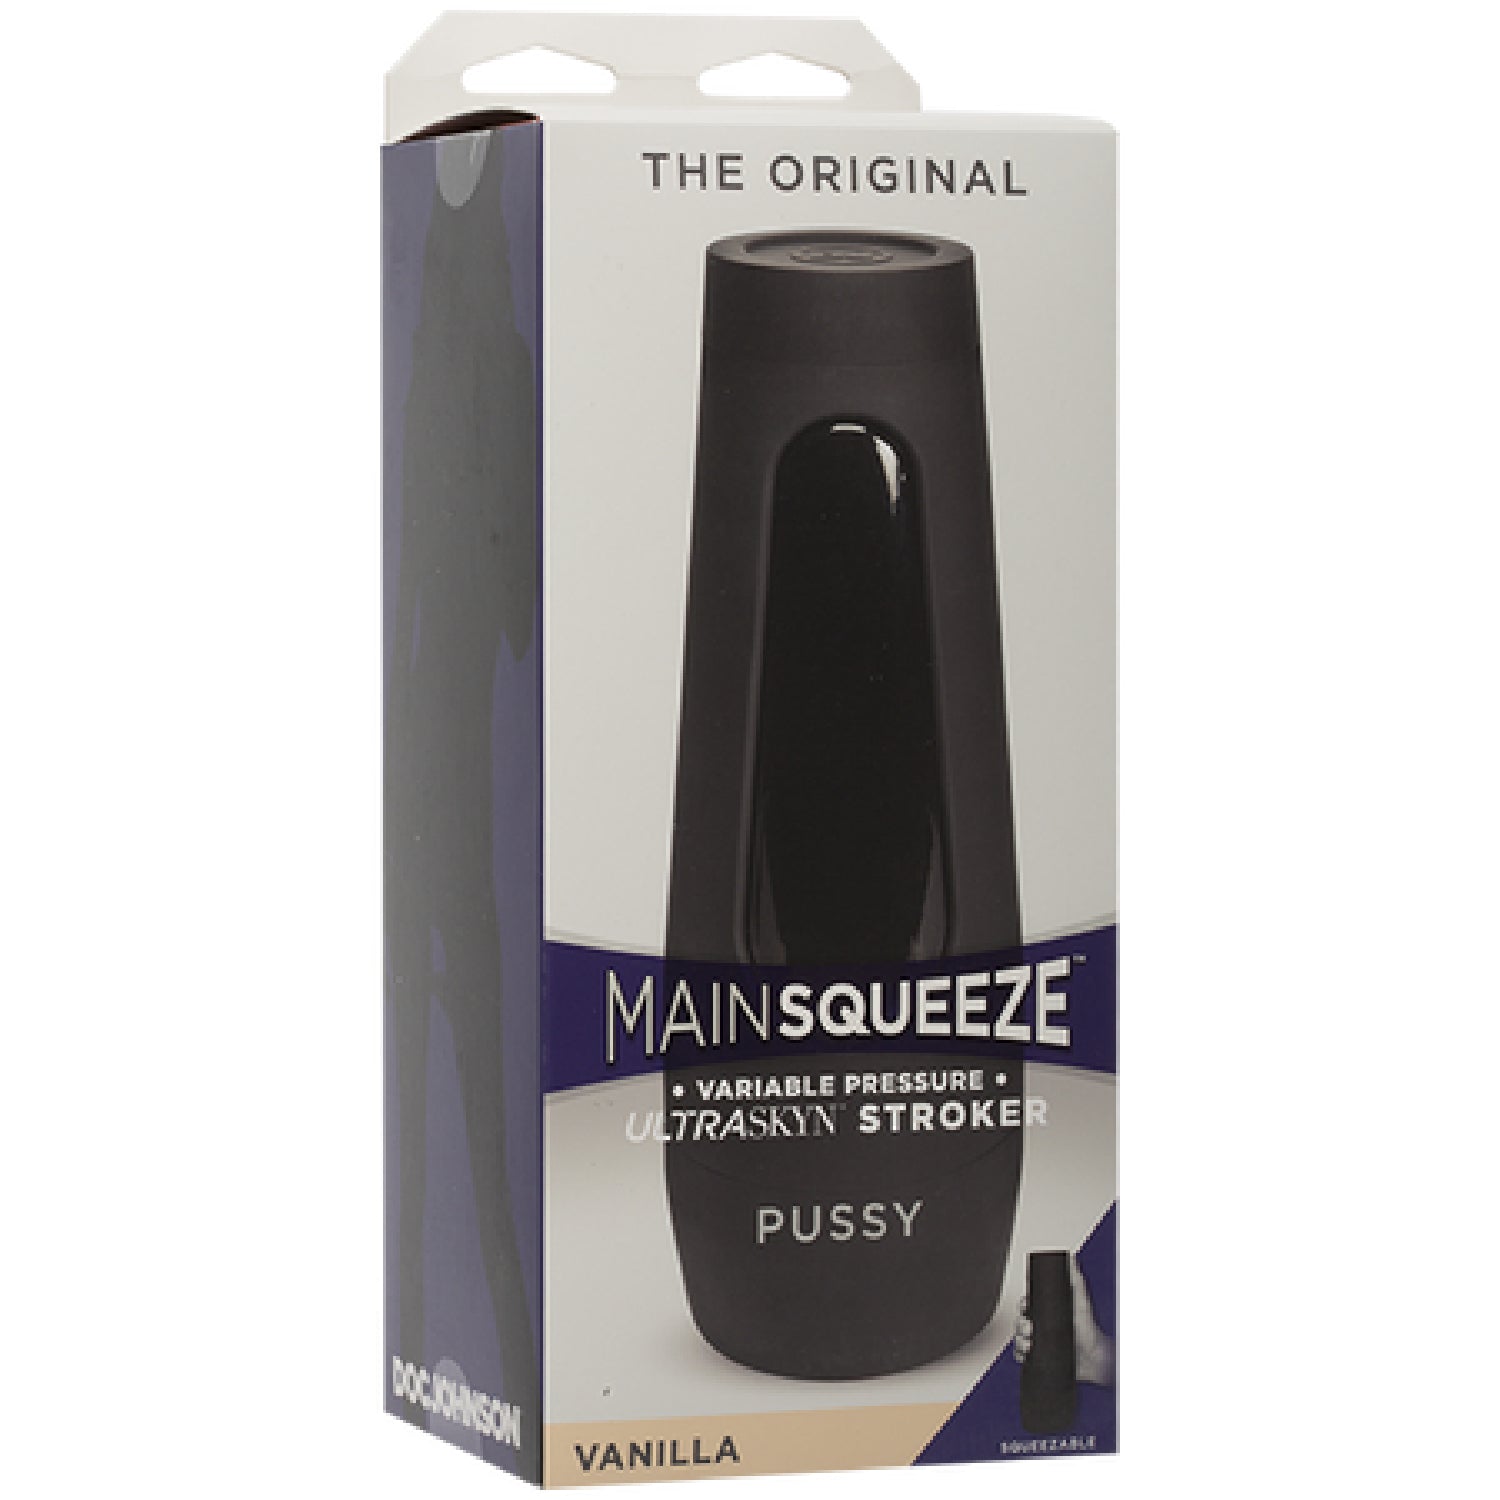 Main Squeeze - The Original Pussy Stroker - Vanilla